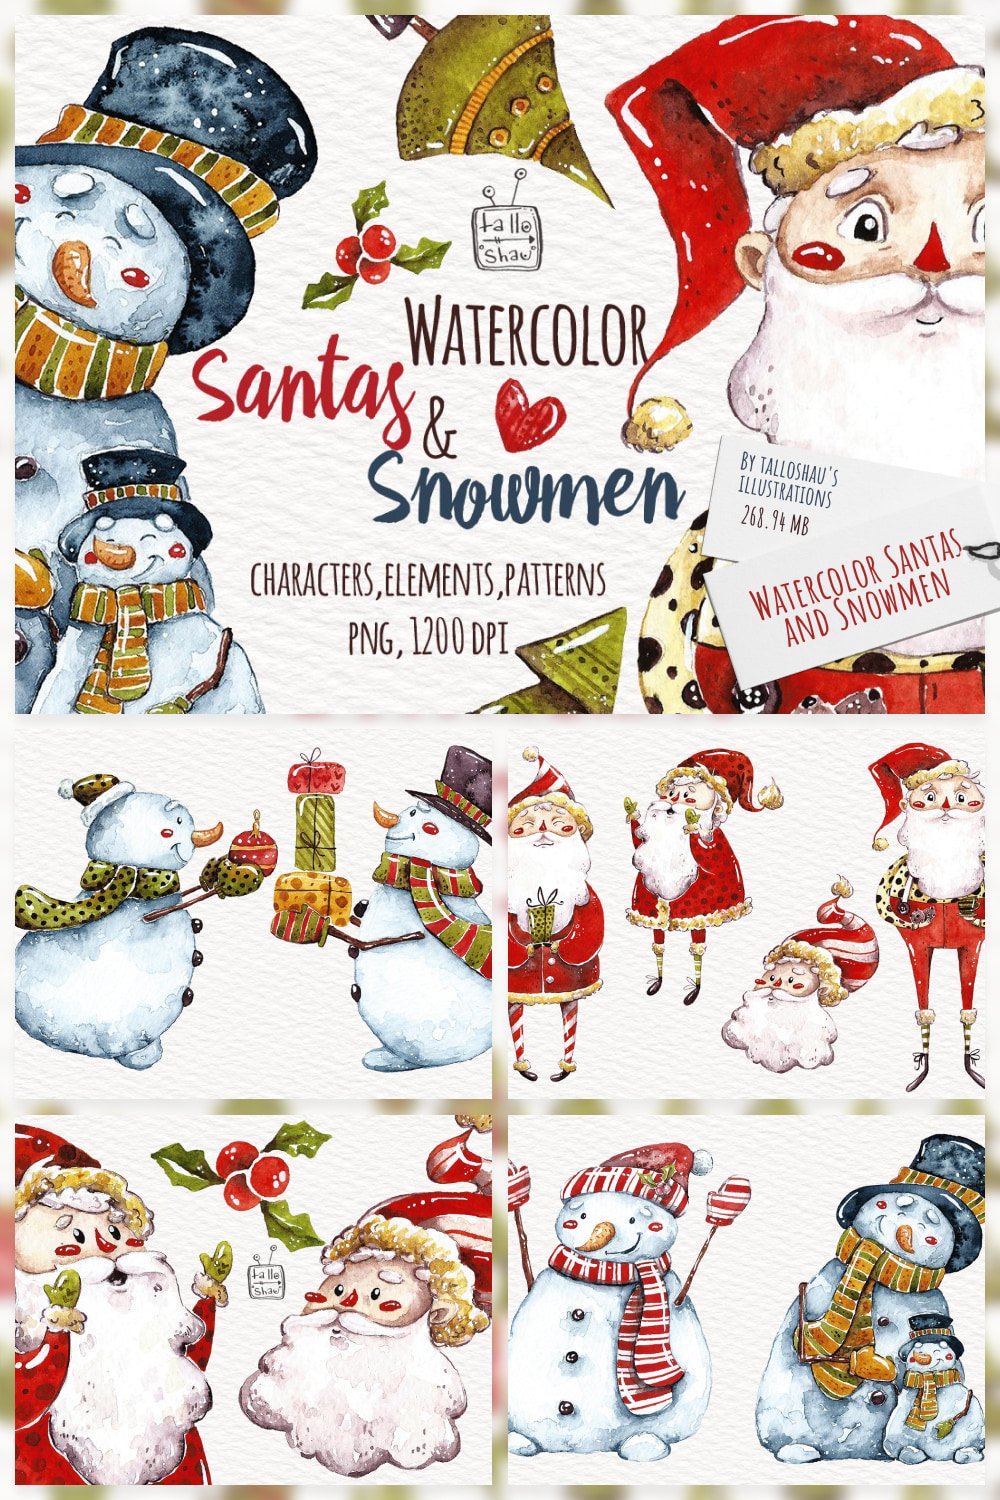 Watercolor Santas and Snowmen Pinterest.